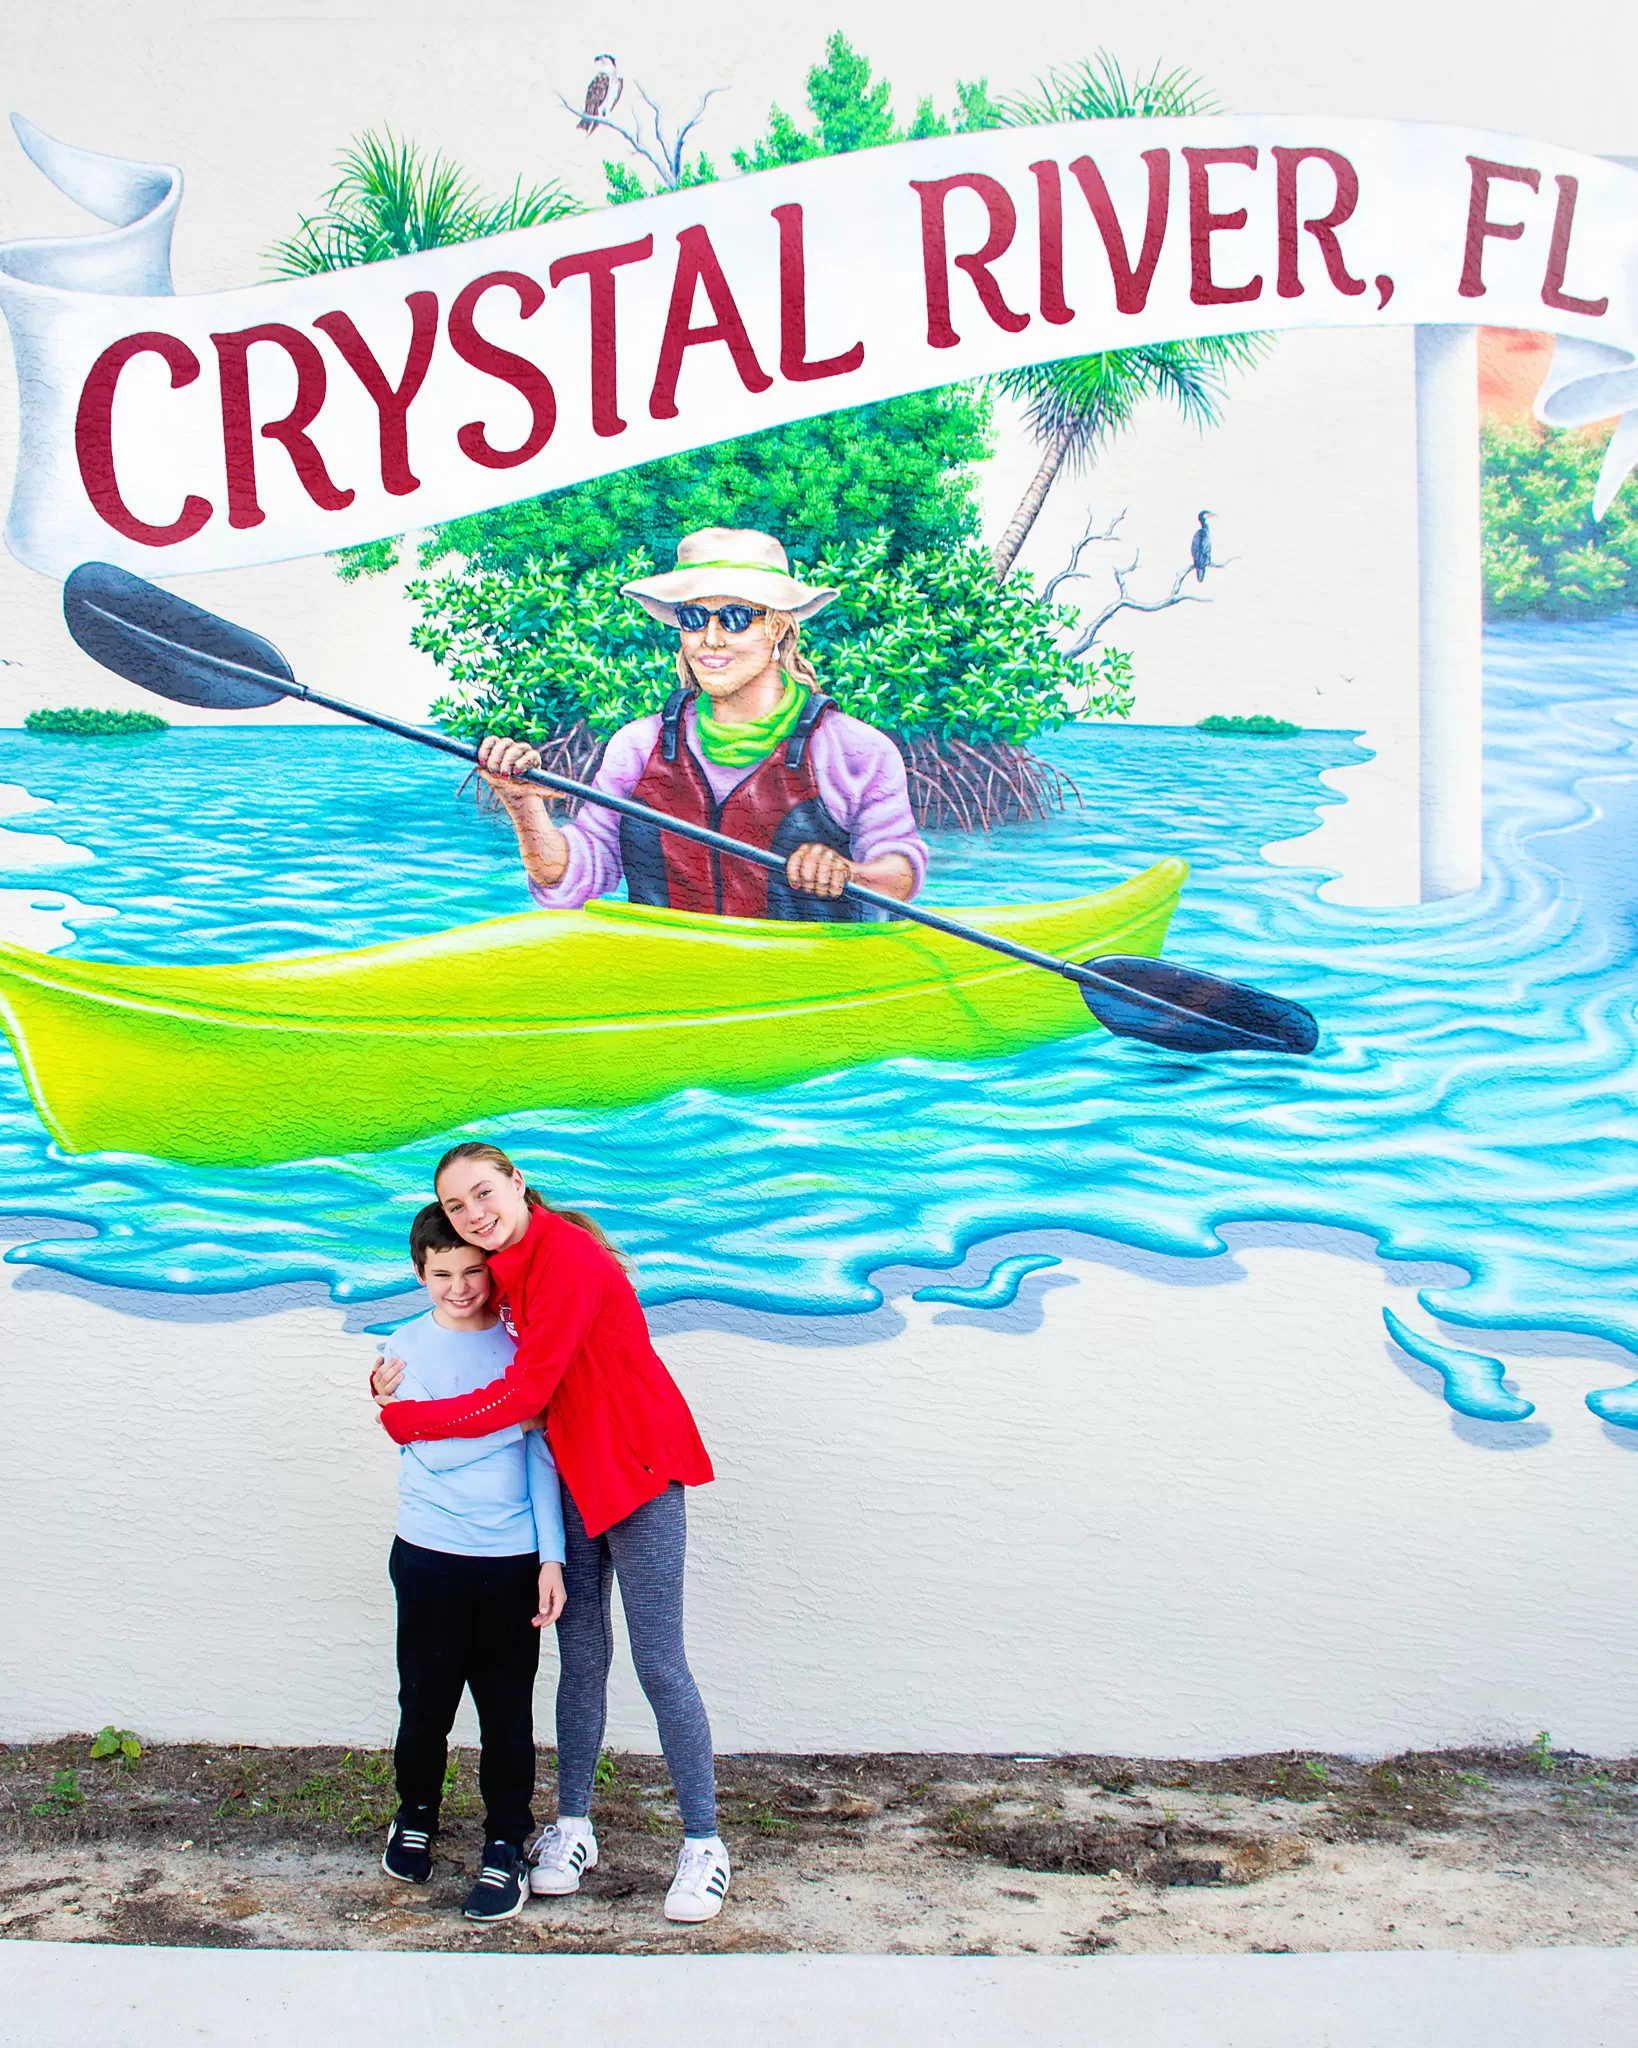 visit crystal river florida